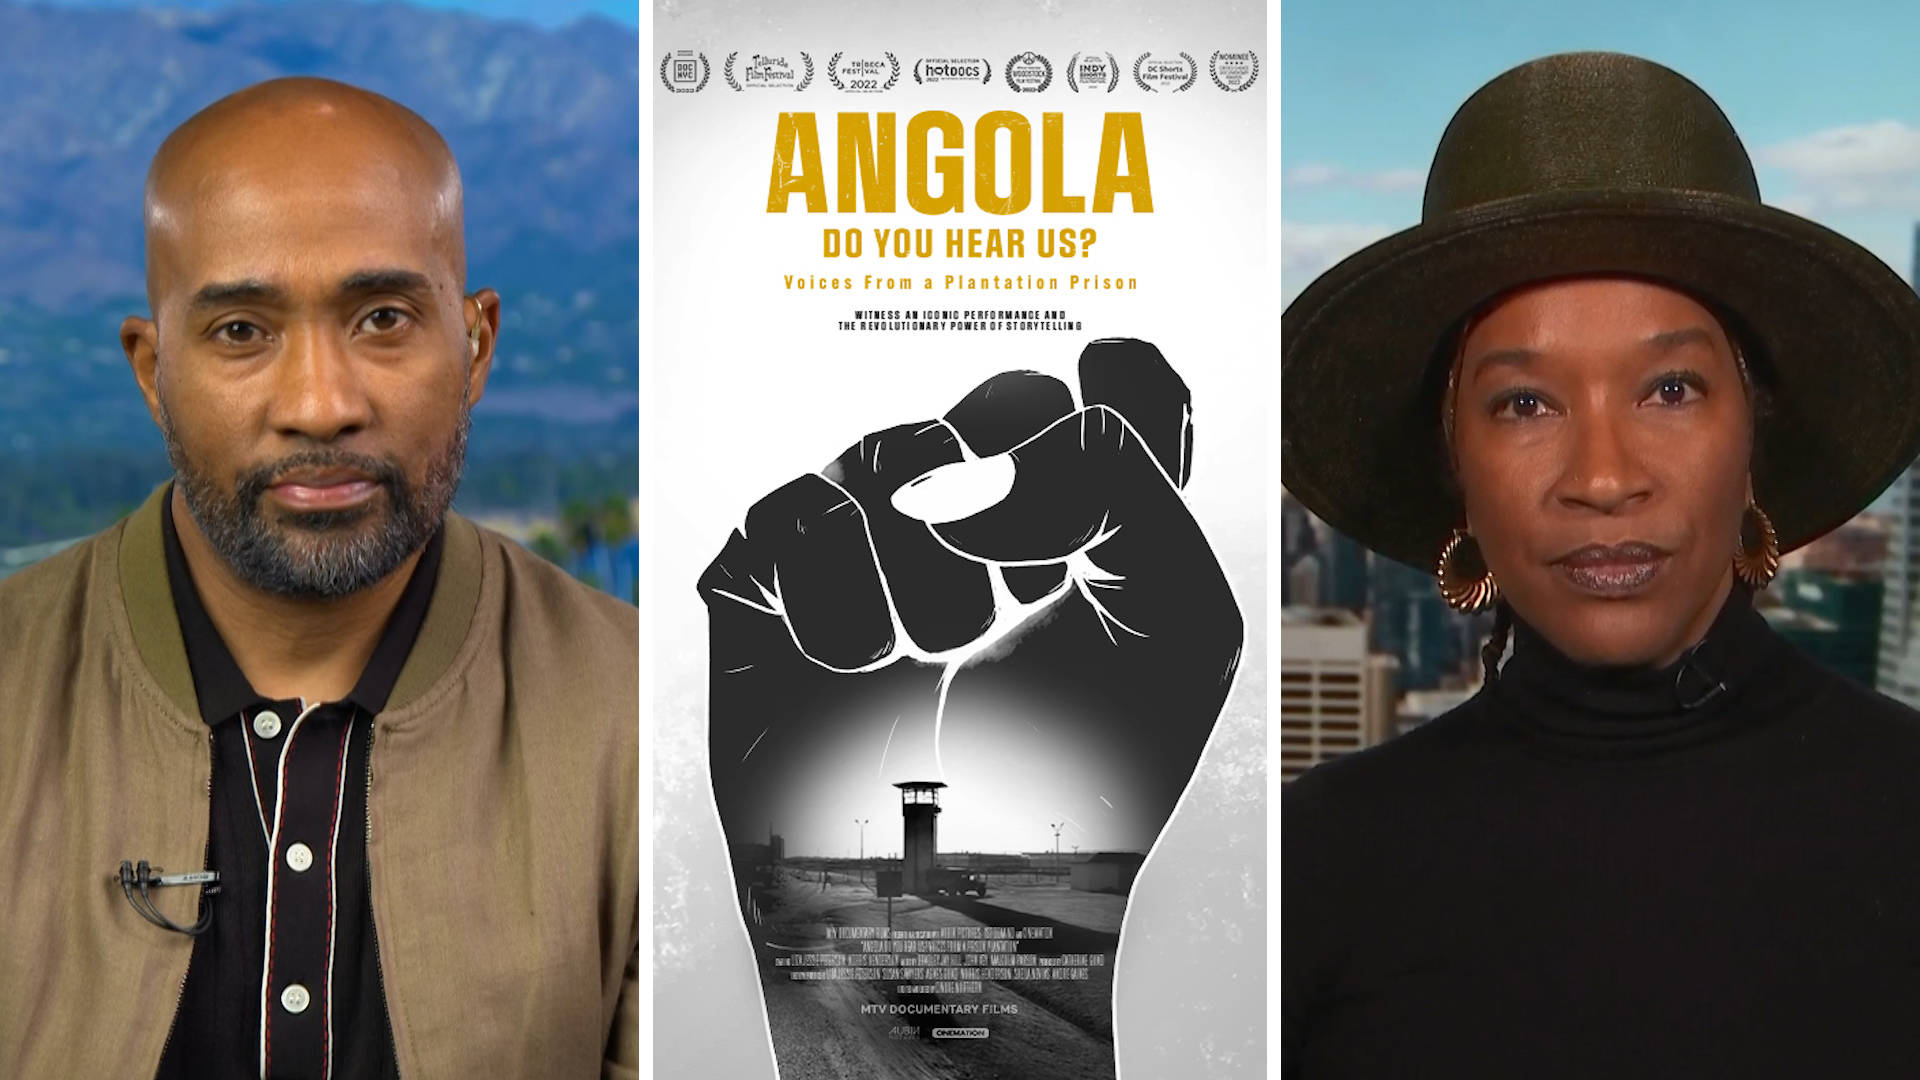 “Angola Do You Hear Us?” Oscar-Shortlisted Doc on Plantation Prison Takes On Mass Incarceration - Democracy Now!